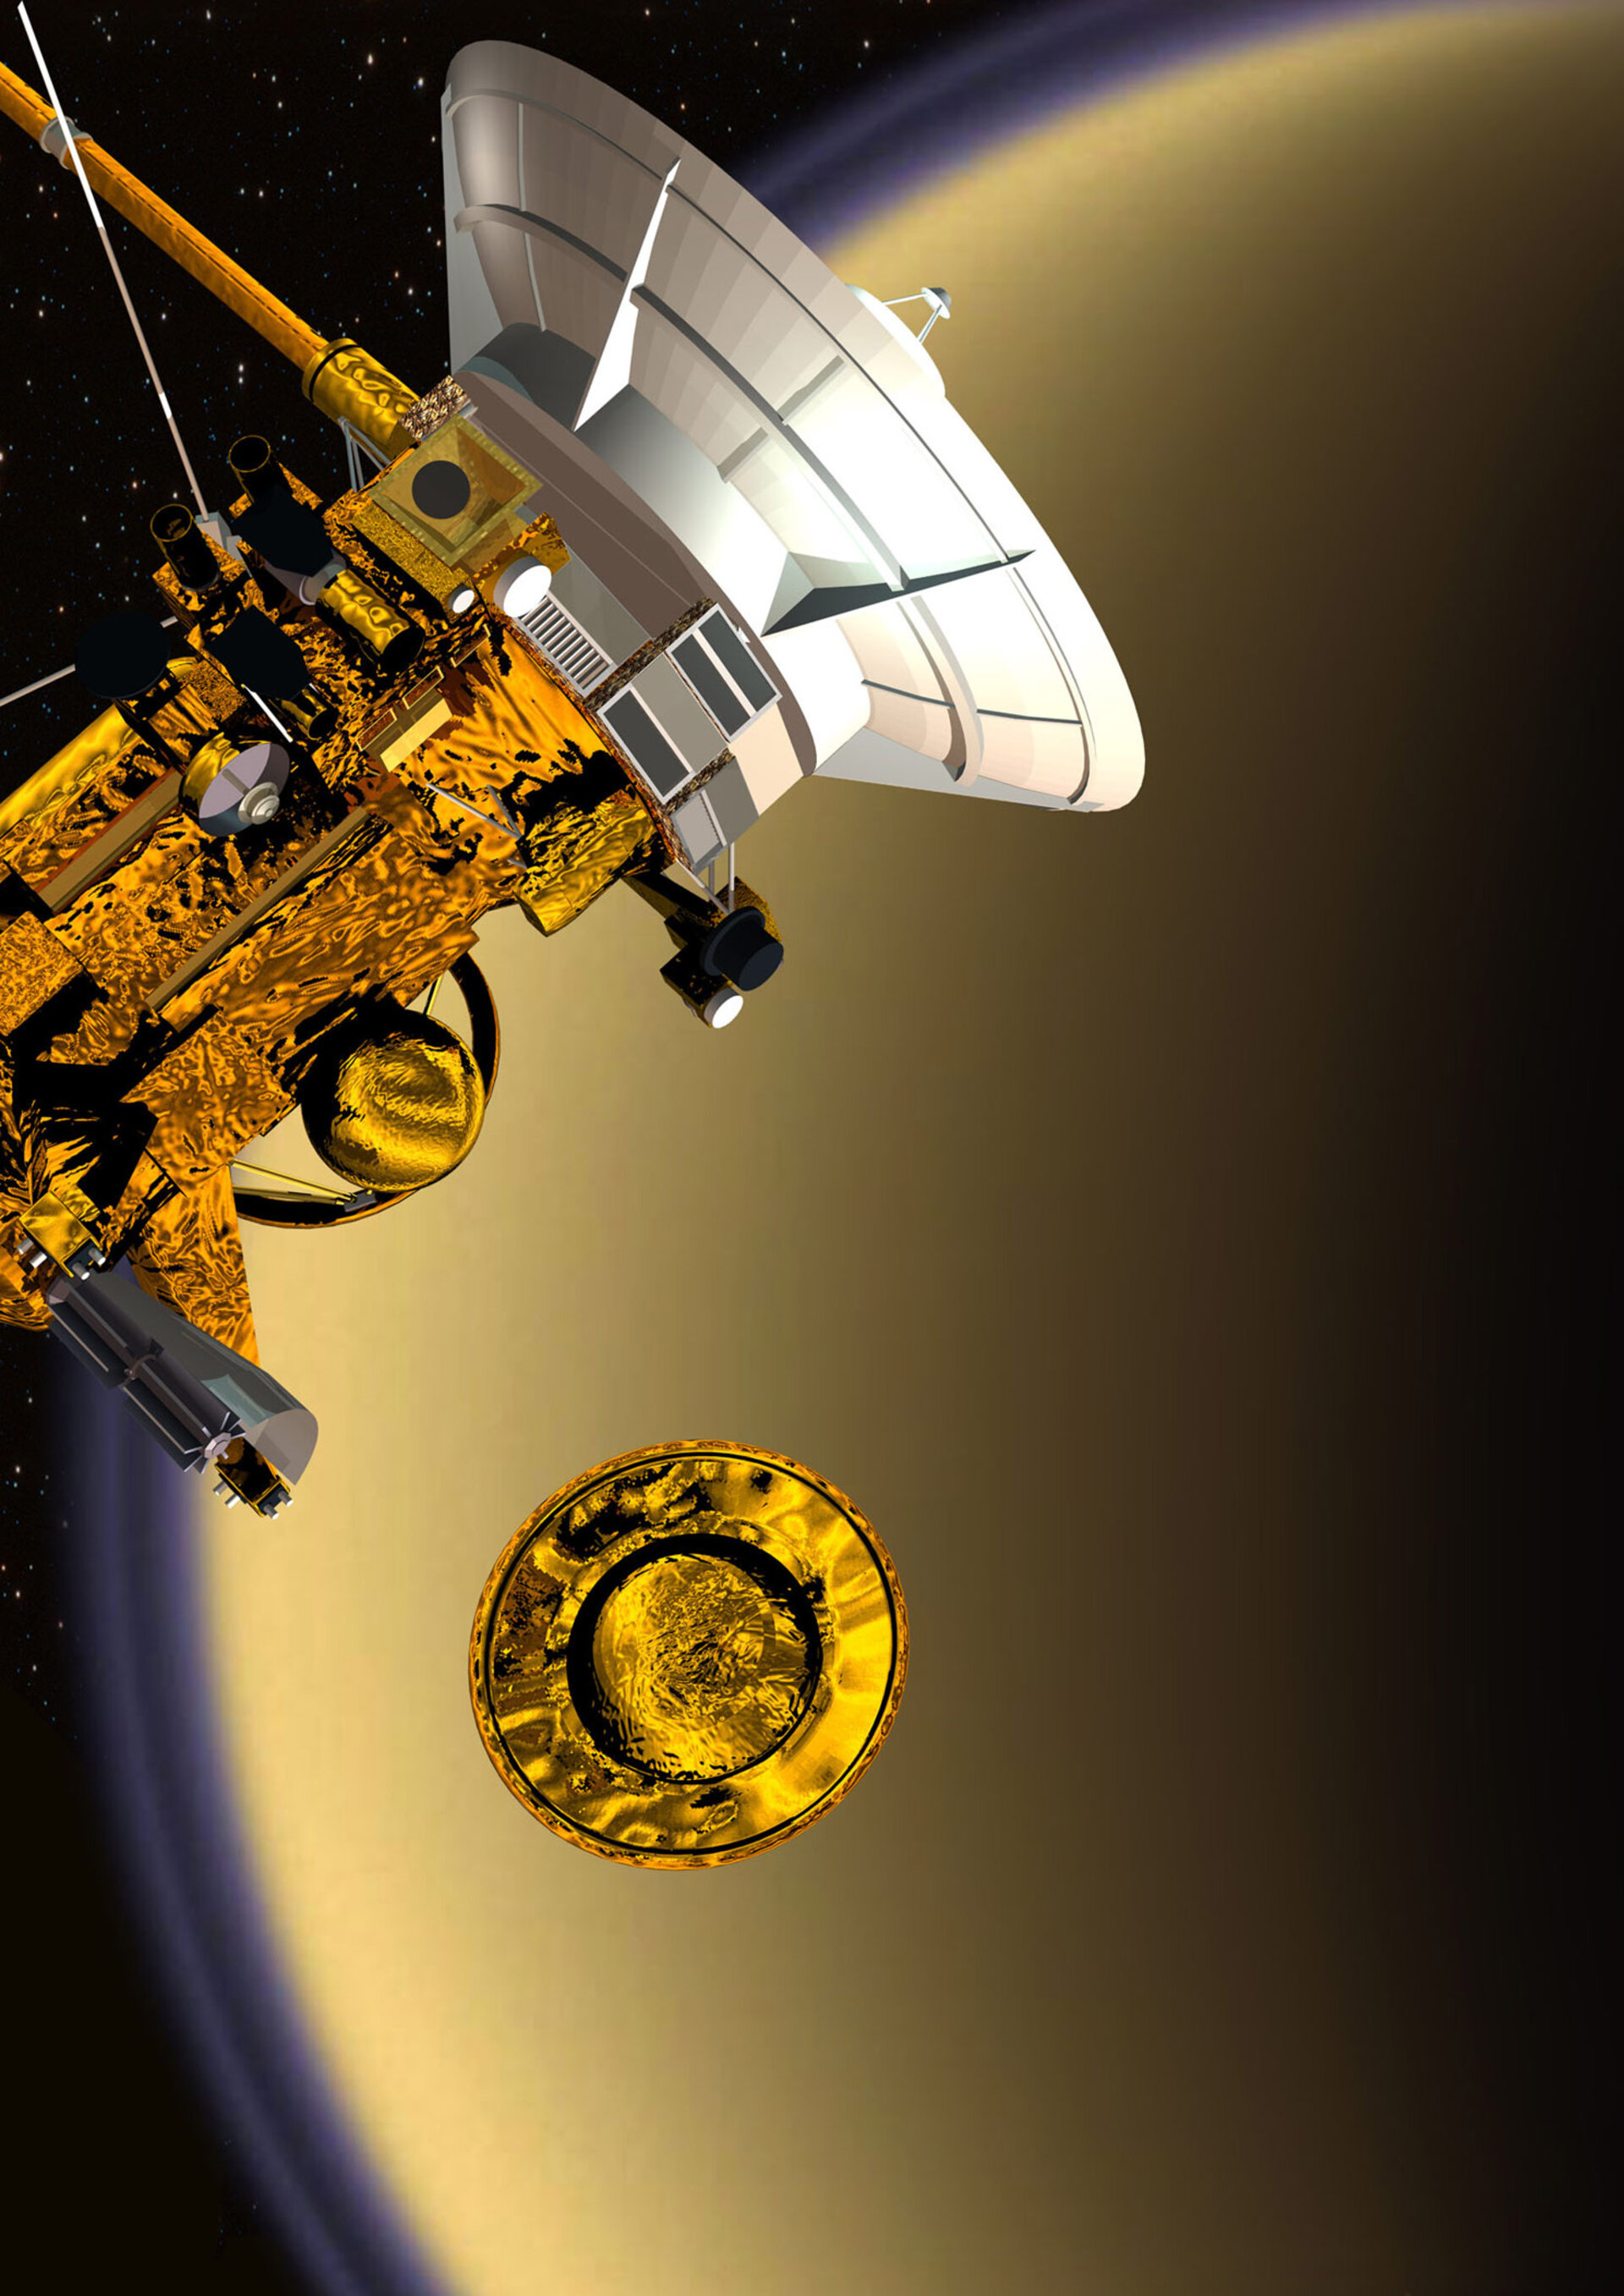 Cassini sent the Huygens probe to land on Saturn’s moon Titan